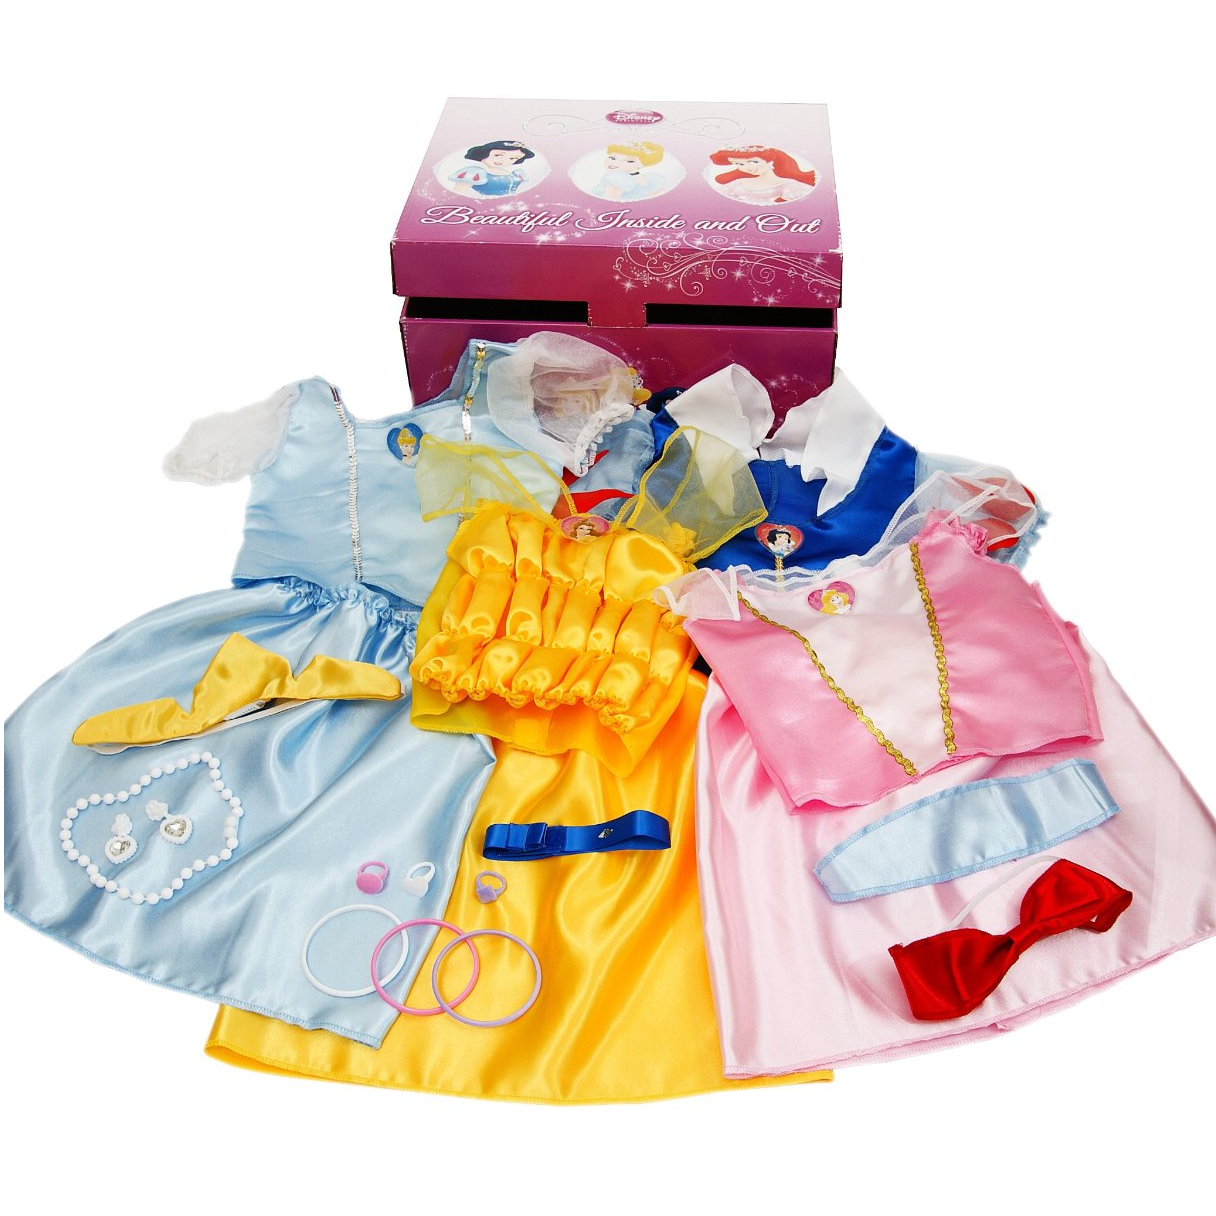 Amazon: Disney Princess Dress Up Trunk Only $19.99! (Amazon’s #1 Best Seller)